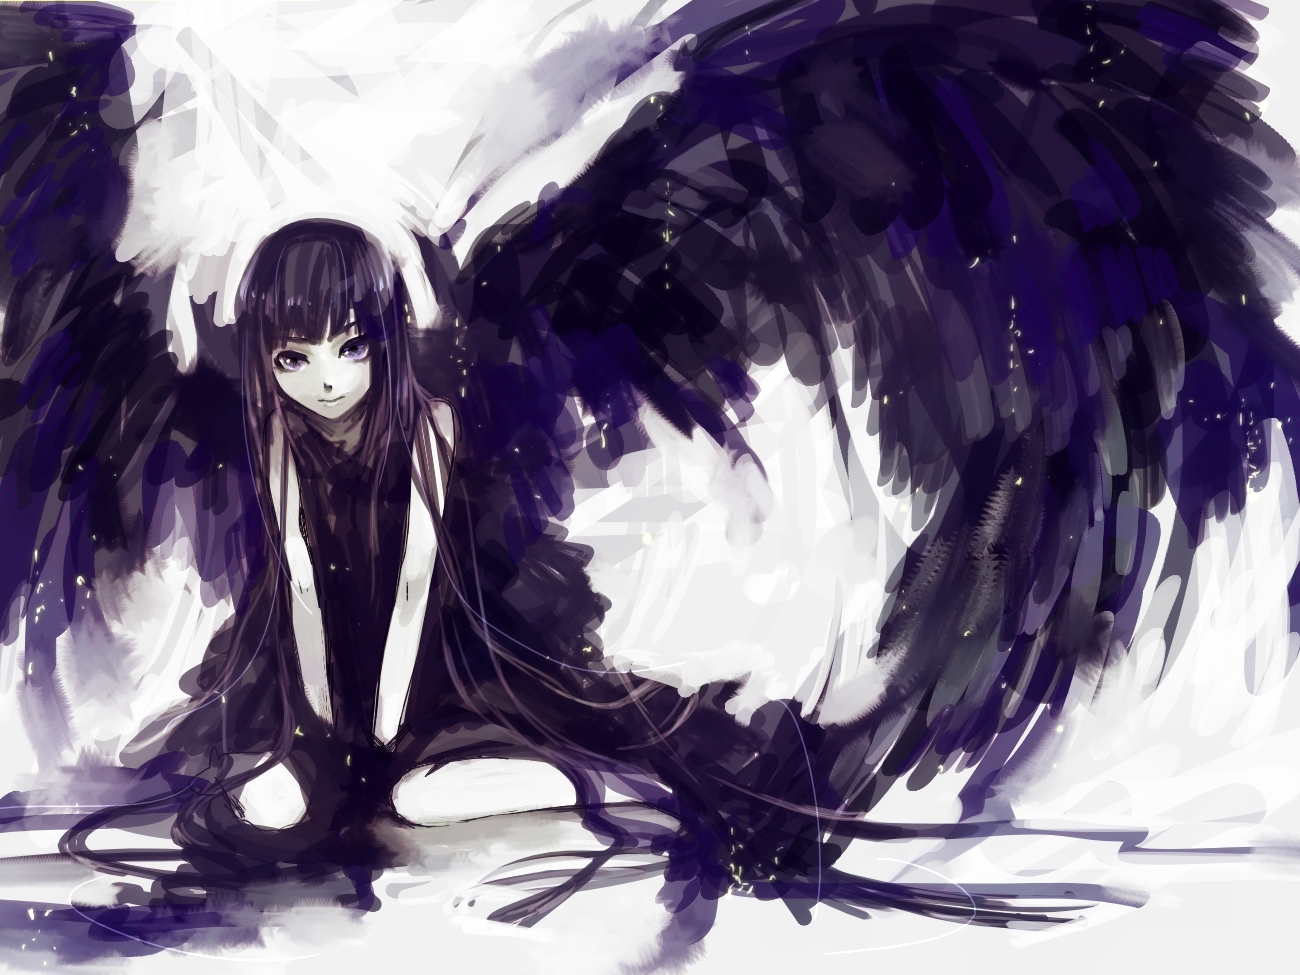 Fallen Angel Anime Girl - 1300x975 Wallpaper 